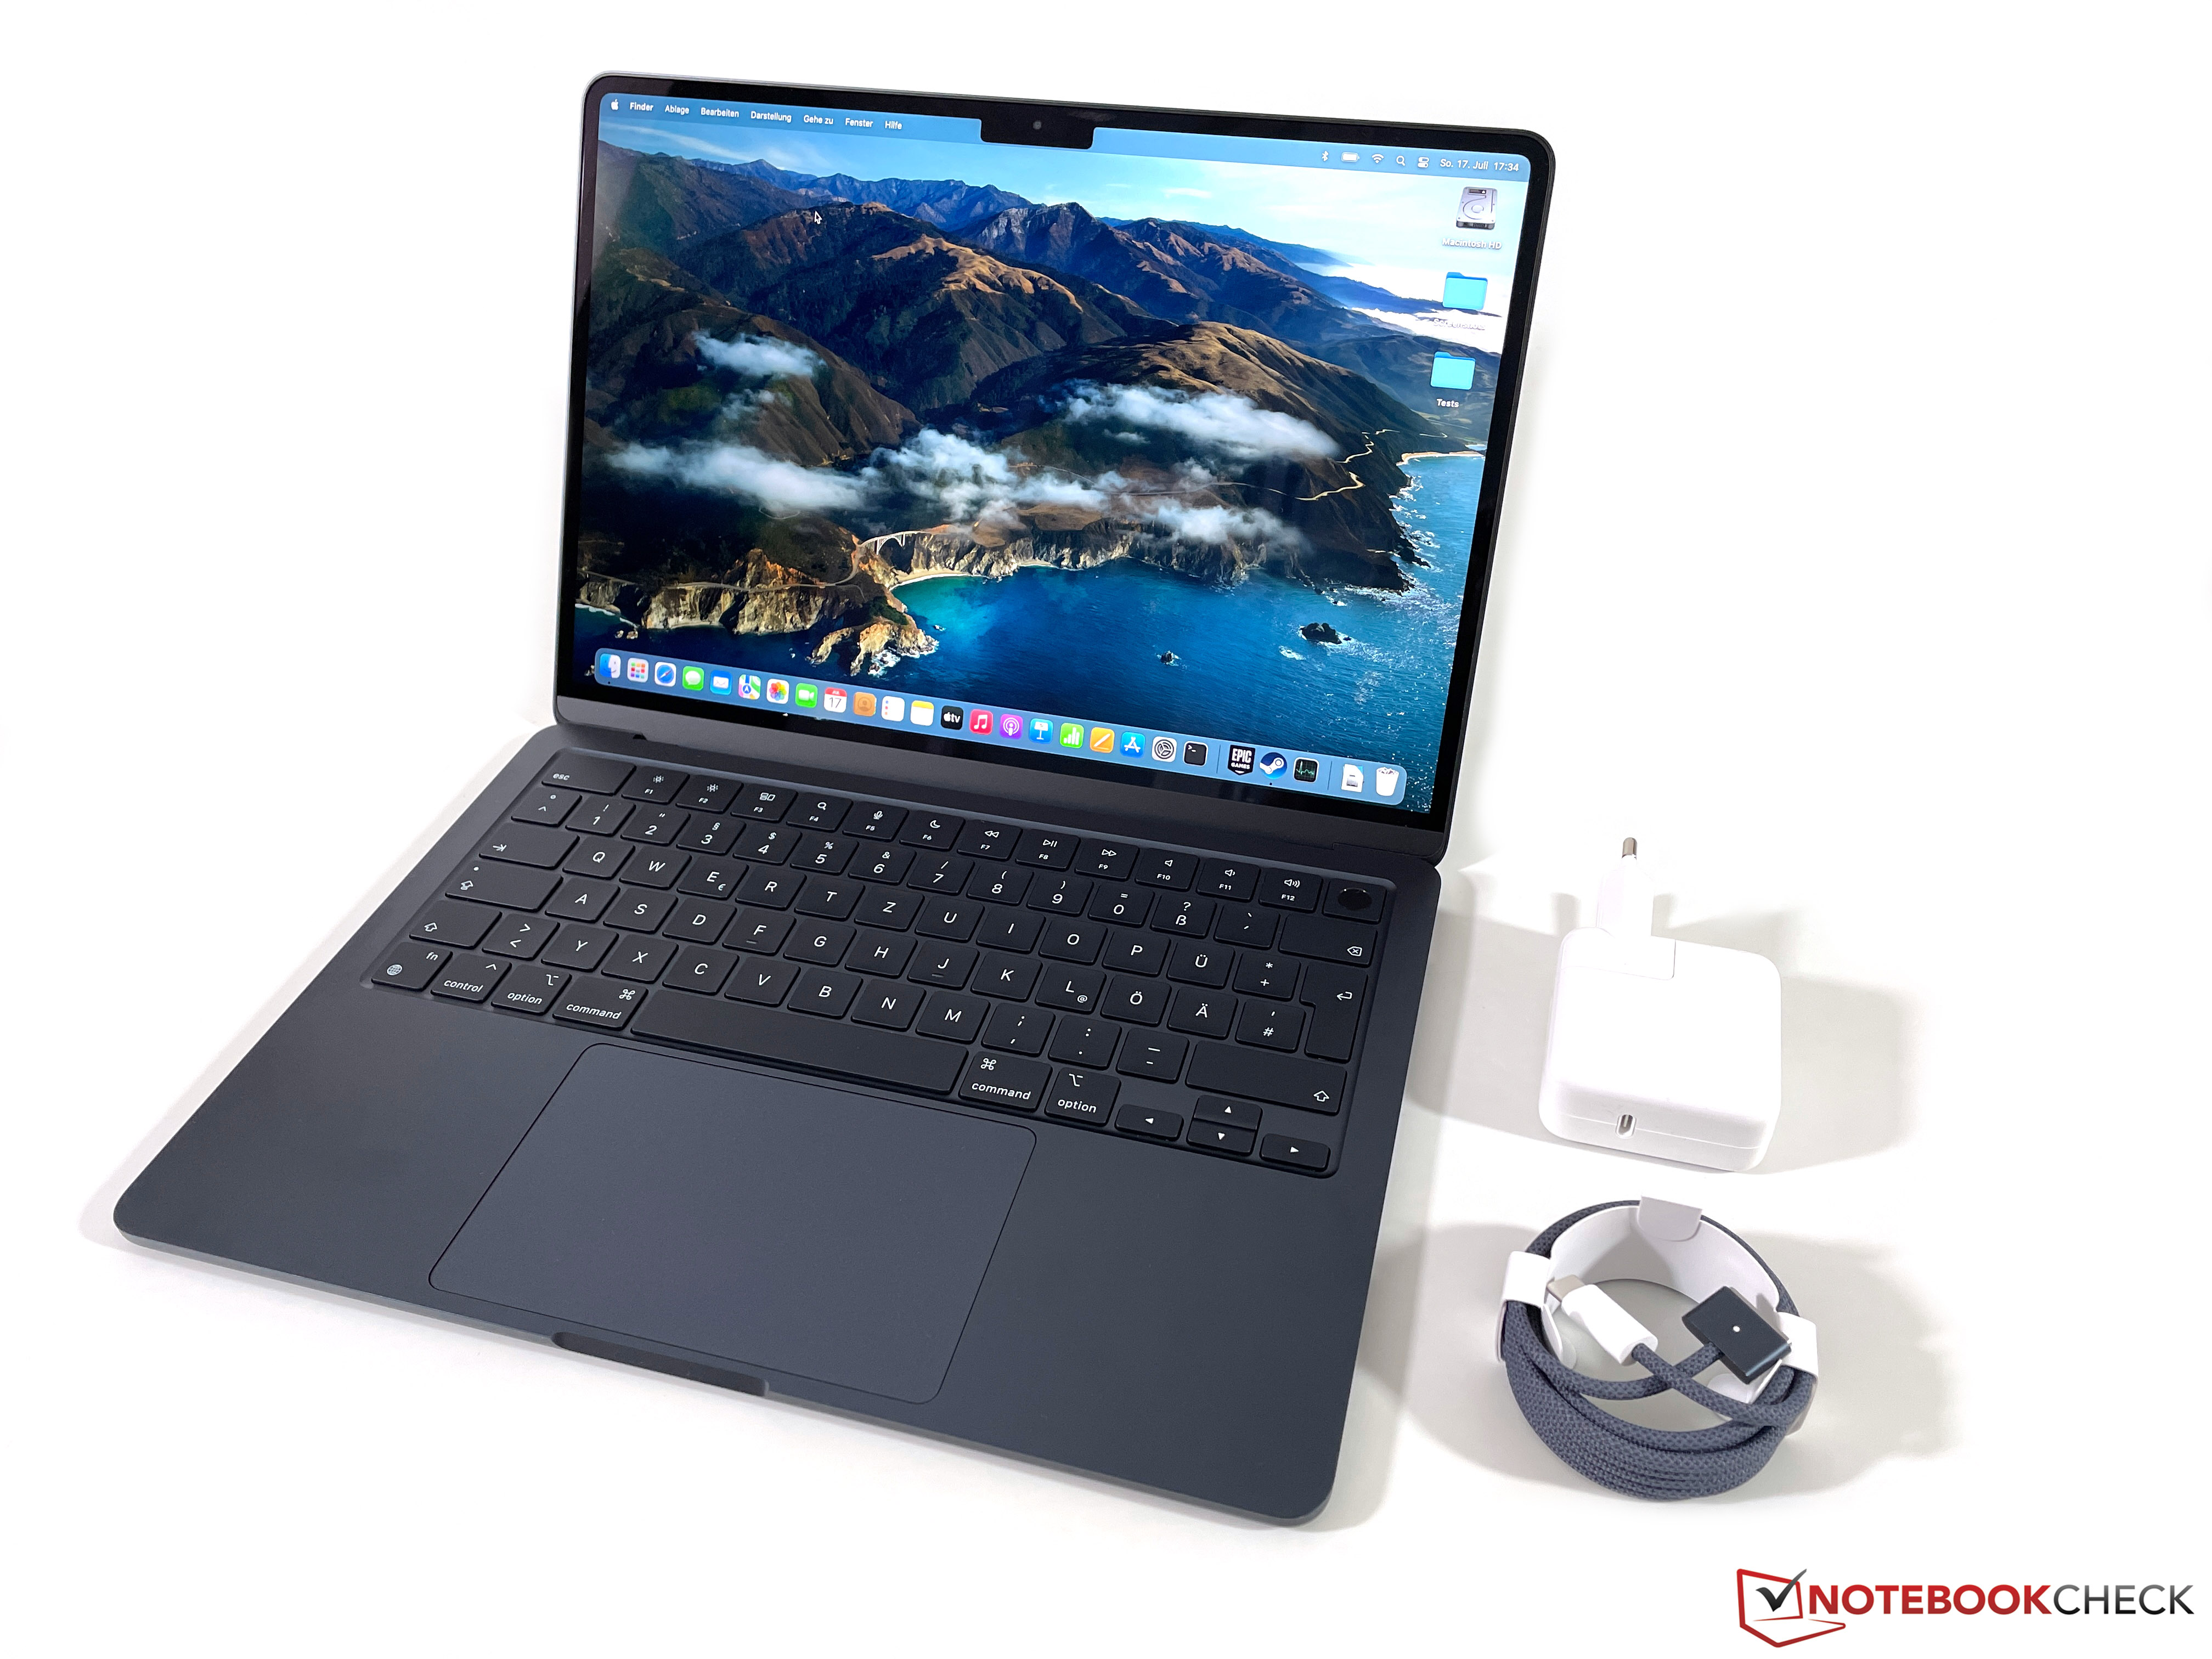 MacBook Air 13 and MacBook Air 15 powered by 3 nm Apple M3